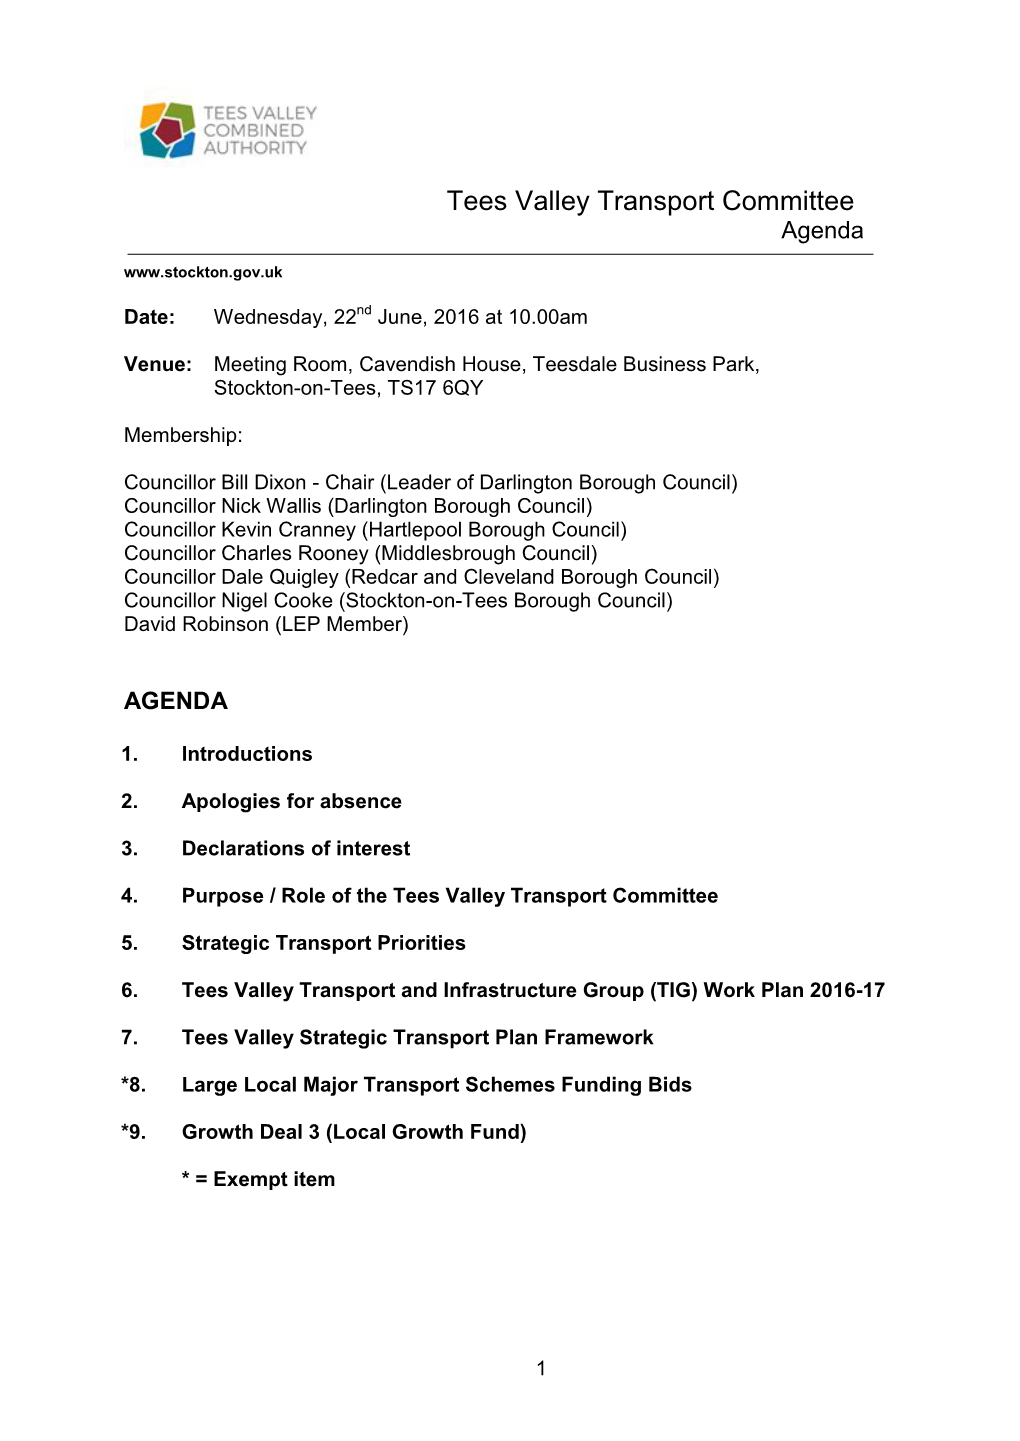 Tees Valley Transport Committee Agenda